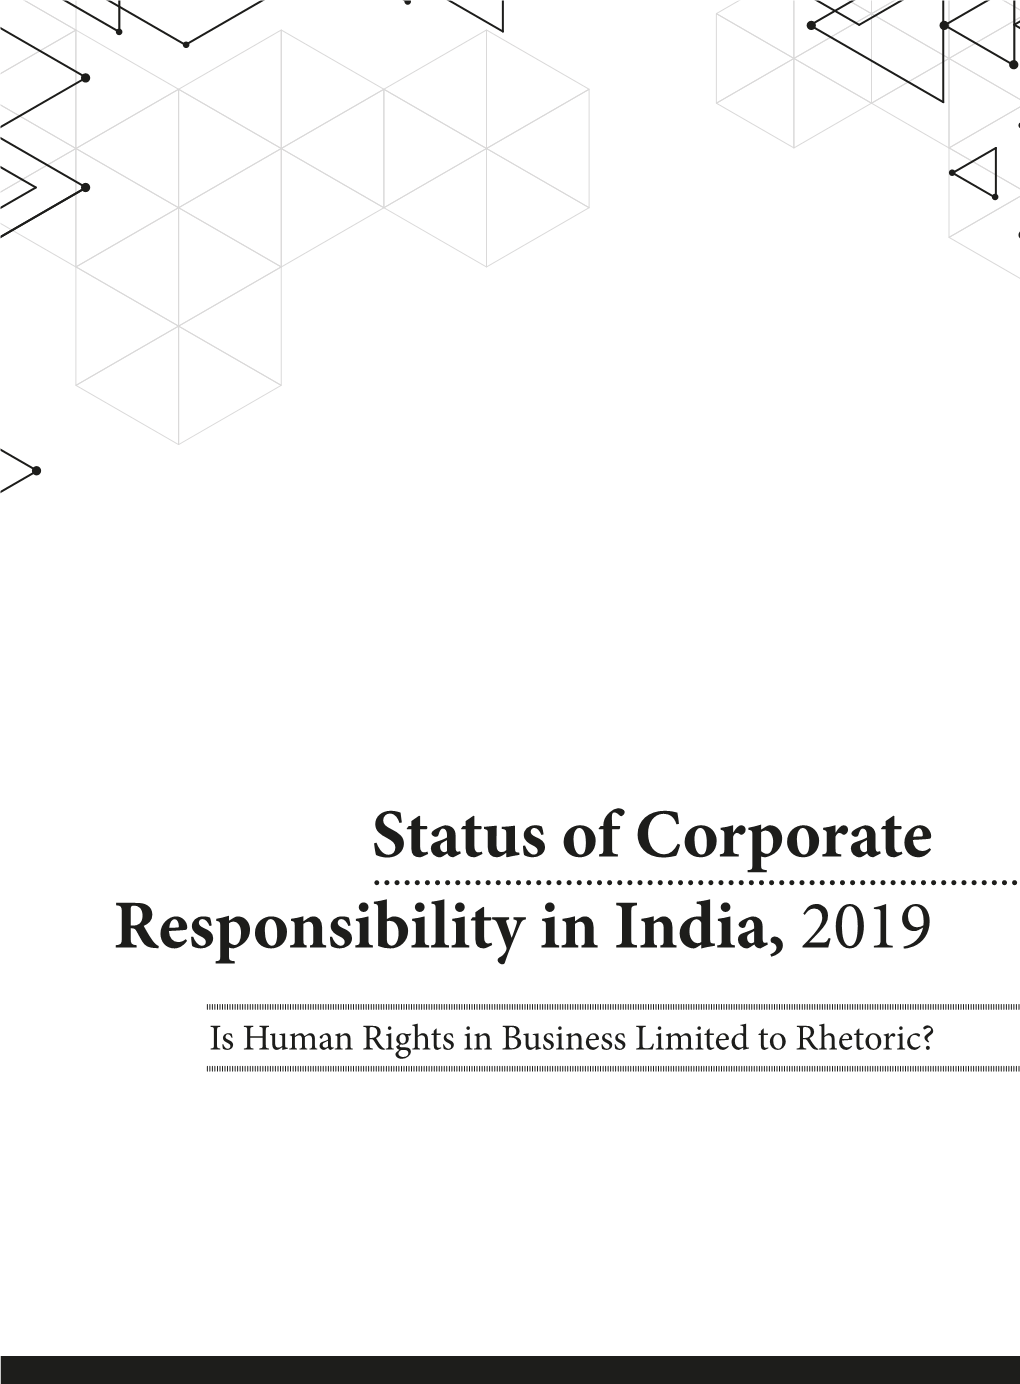 Status of Corporate Responsibility in India, 2019